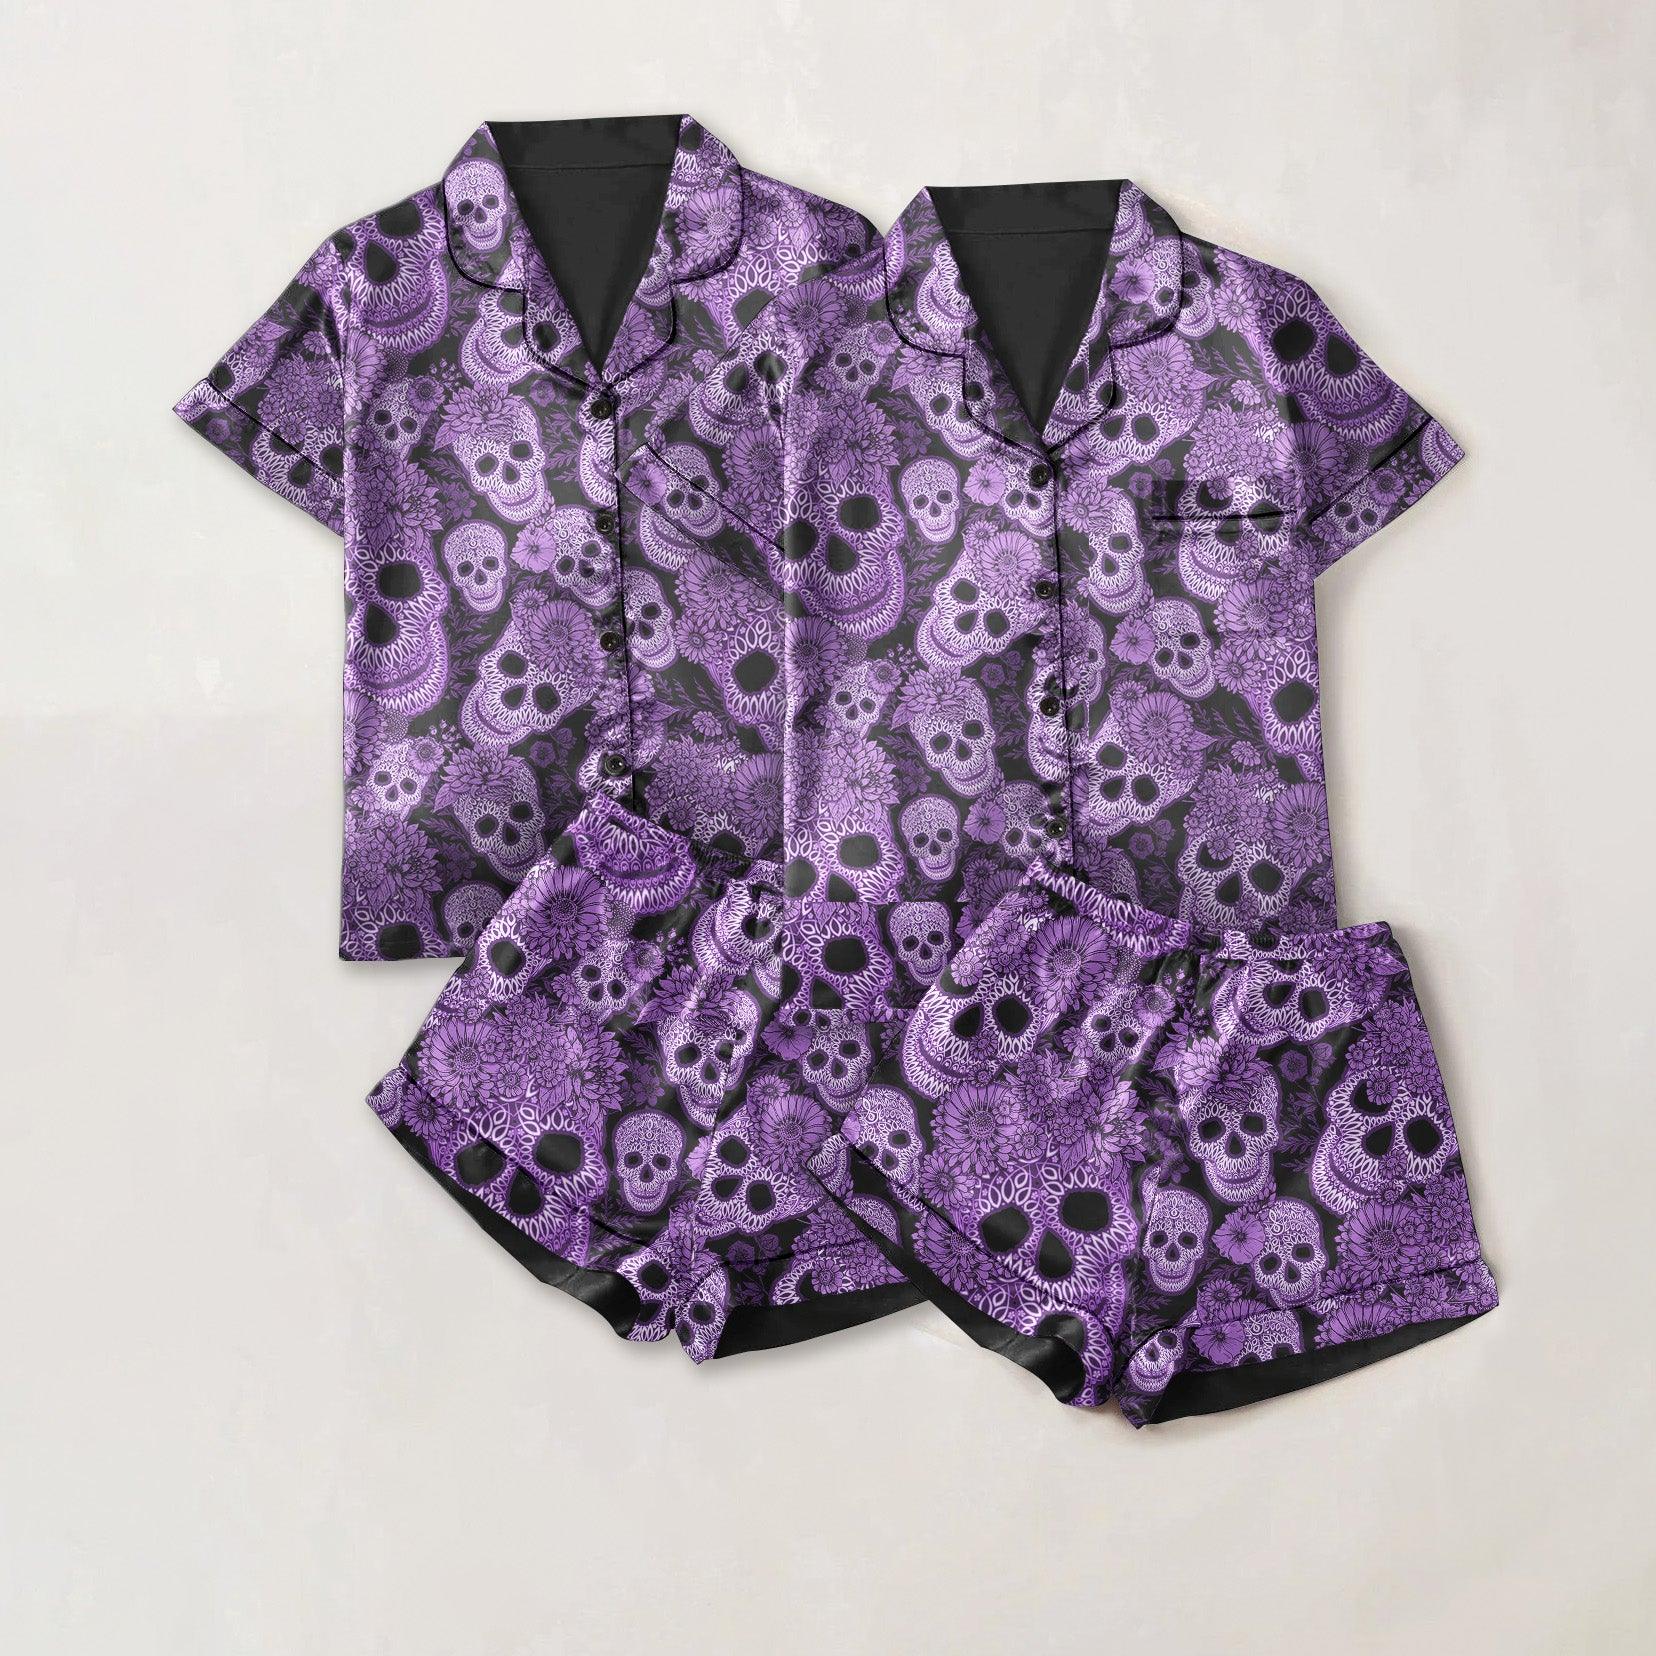 Skull Sugar Purple Sexy Pajama Sets With Short Sleeve - Wonder Skull